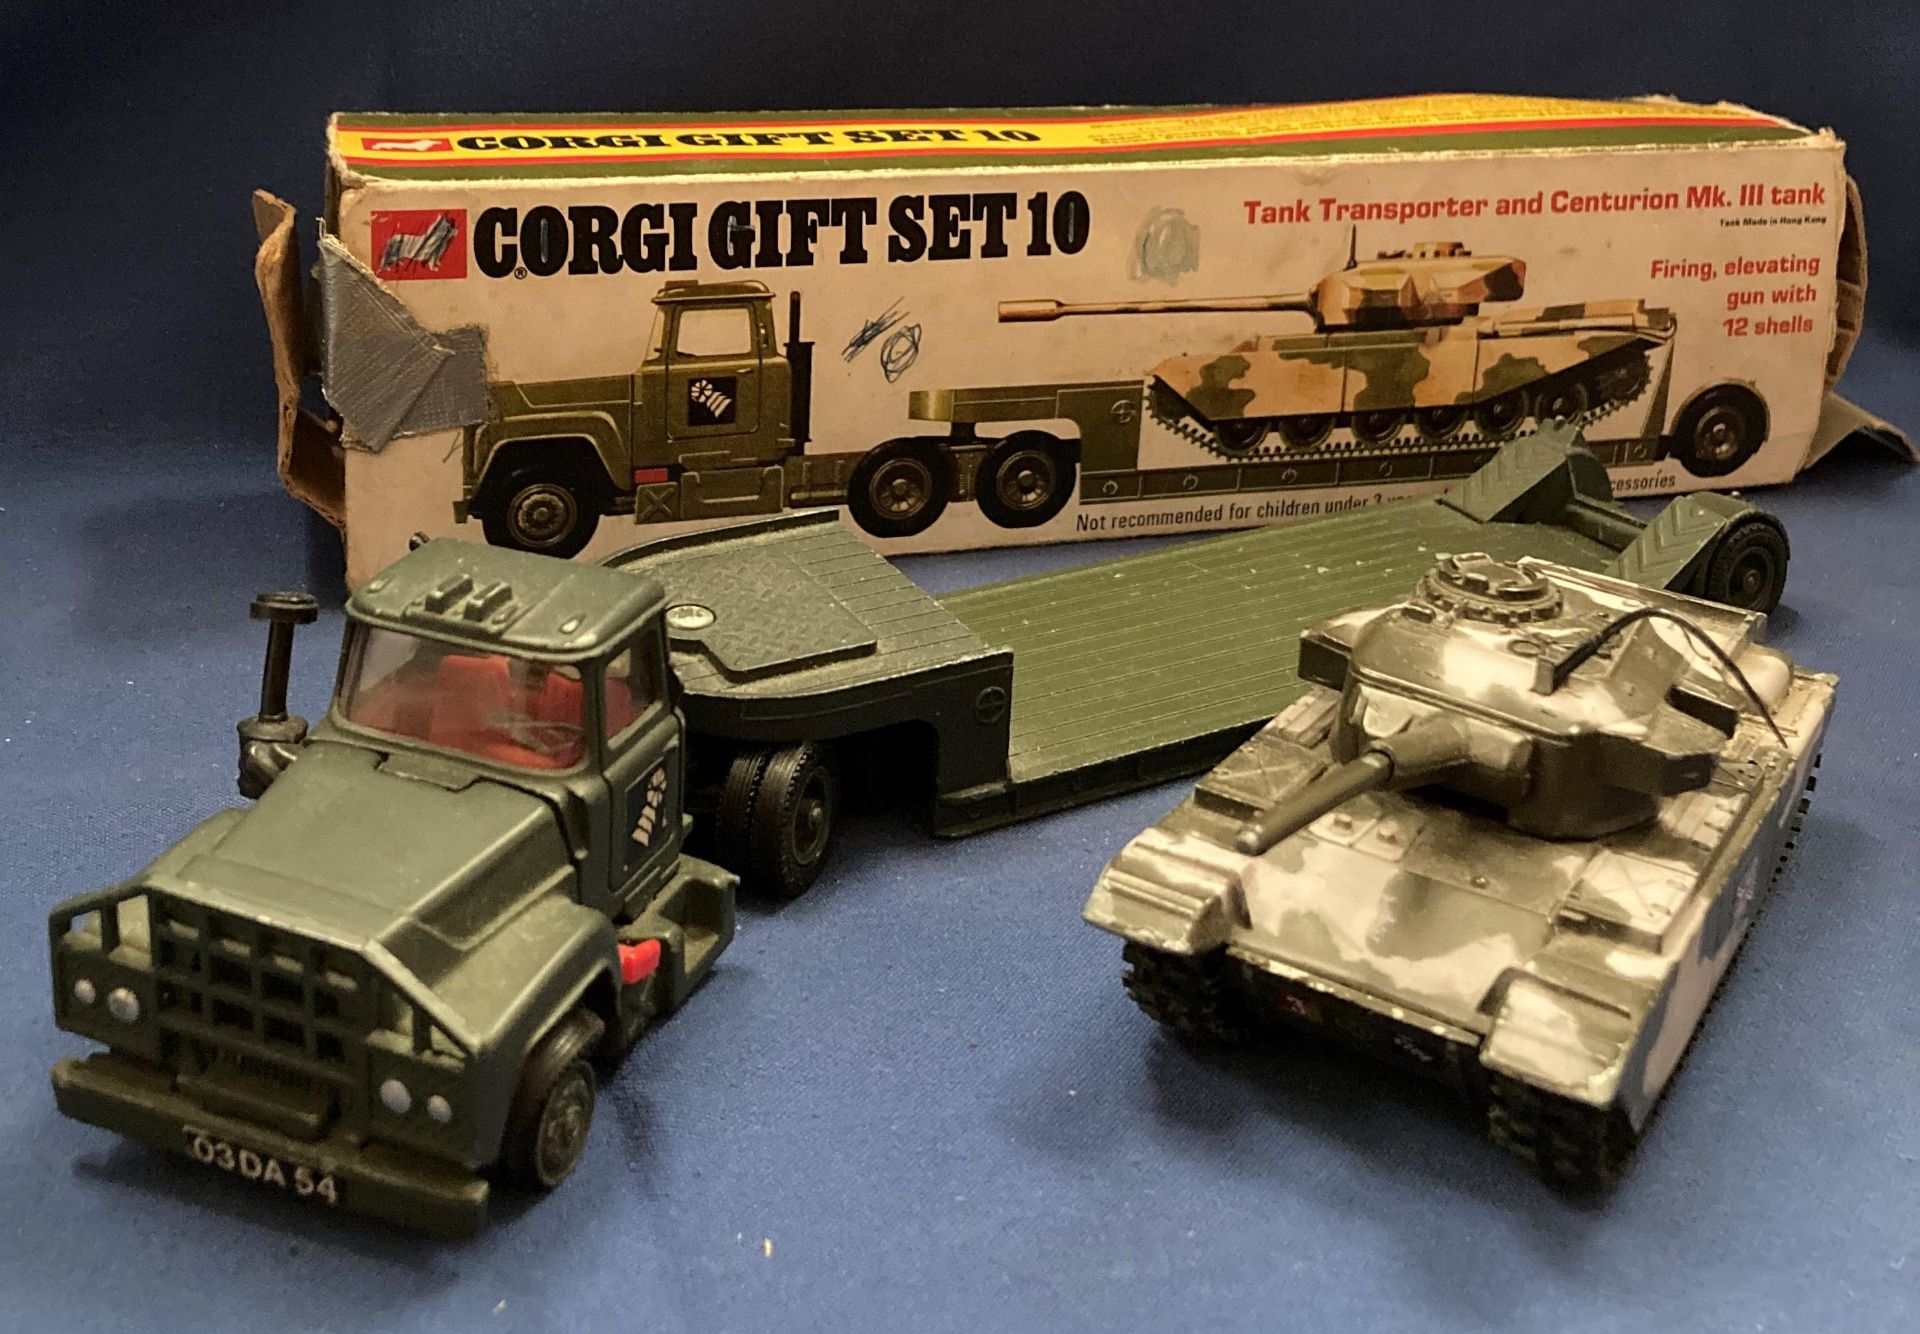 Corgi gift set 10 tank transporter and Centurion MKIII tank in box (box play worn) (S1 glass cab - Image 3 of 4